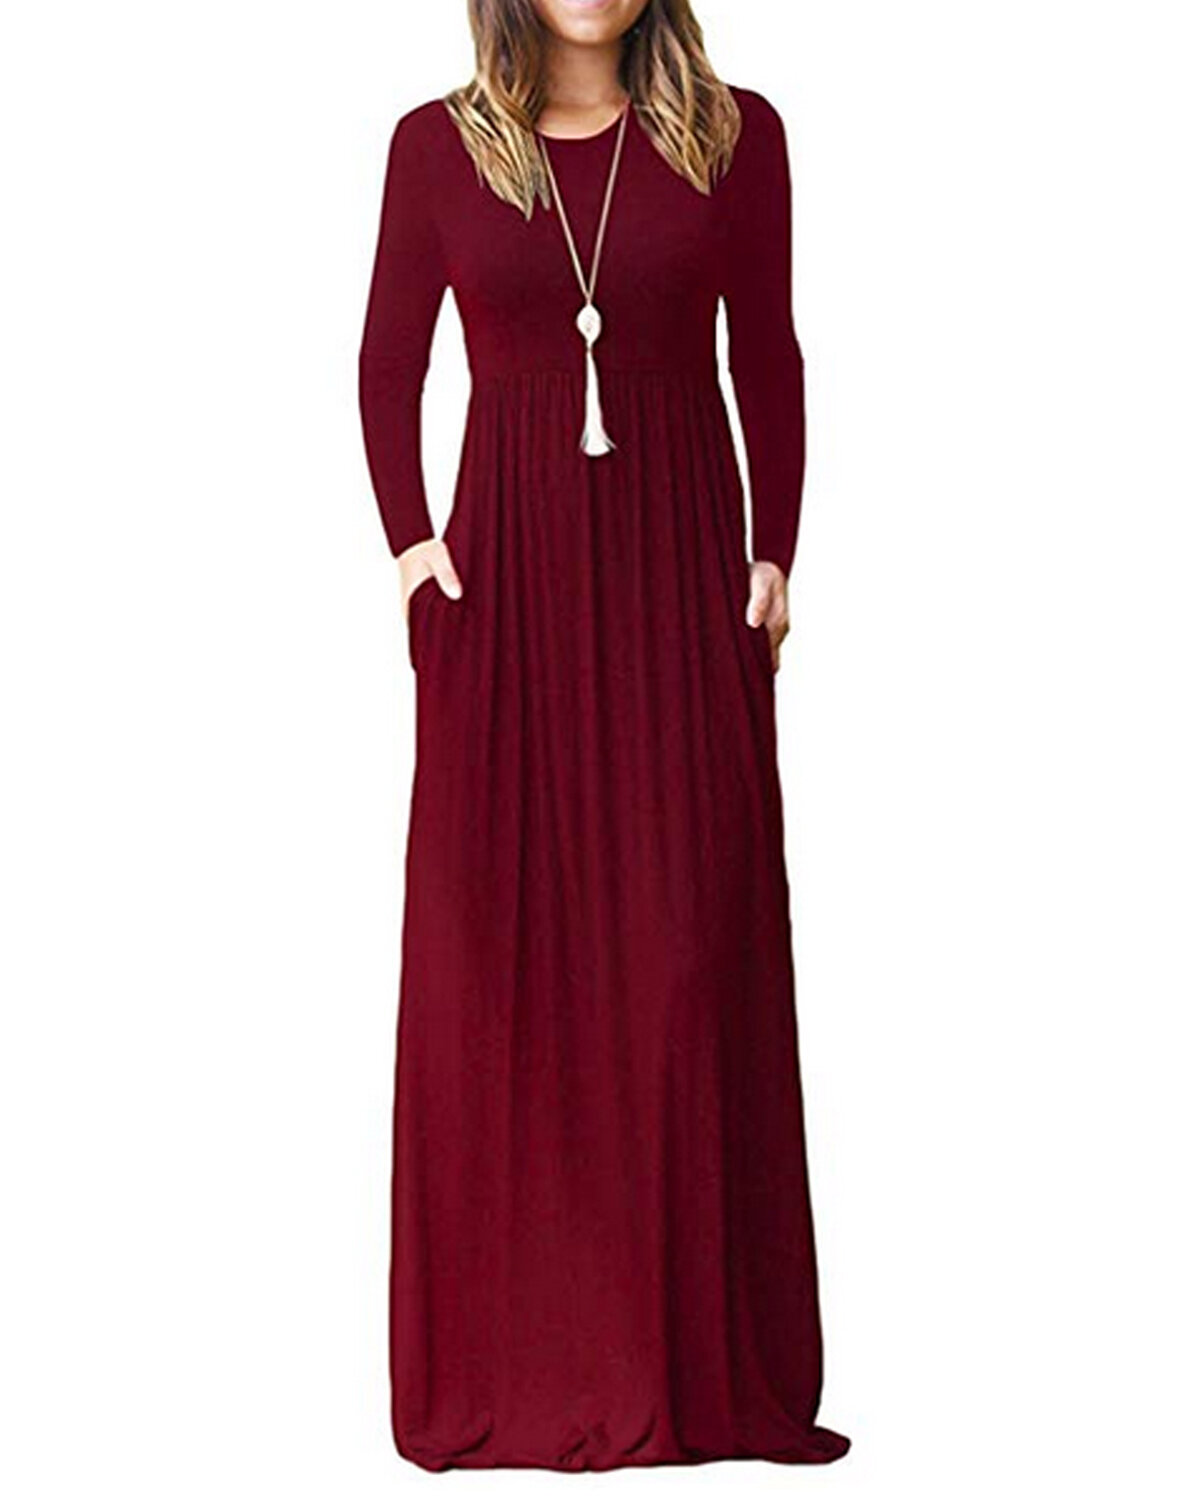 Frauen Langarm Loose Solid Casual Long Maxi Kleid mit Taschen